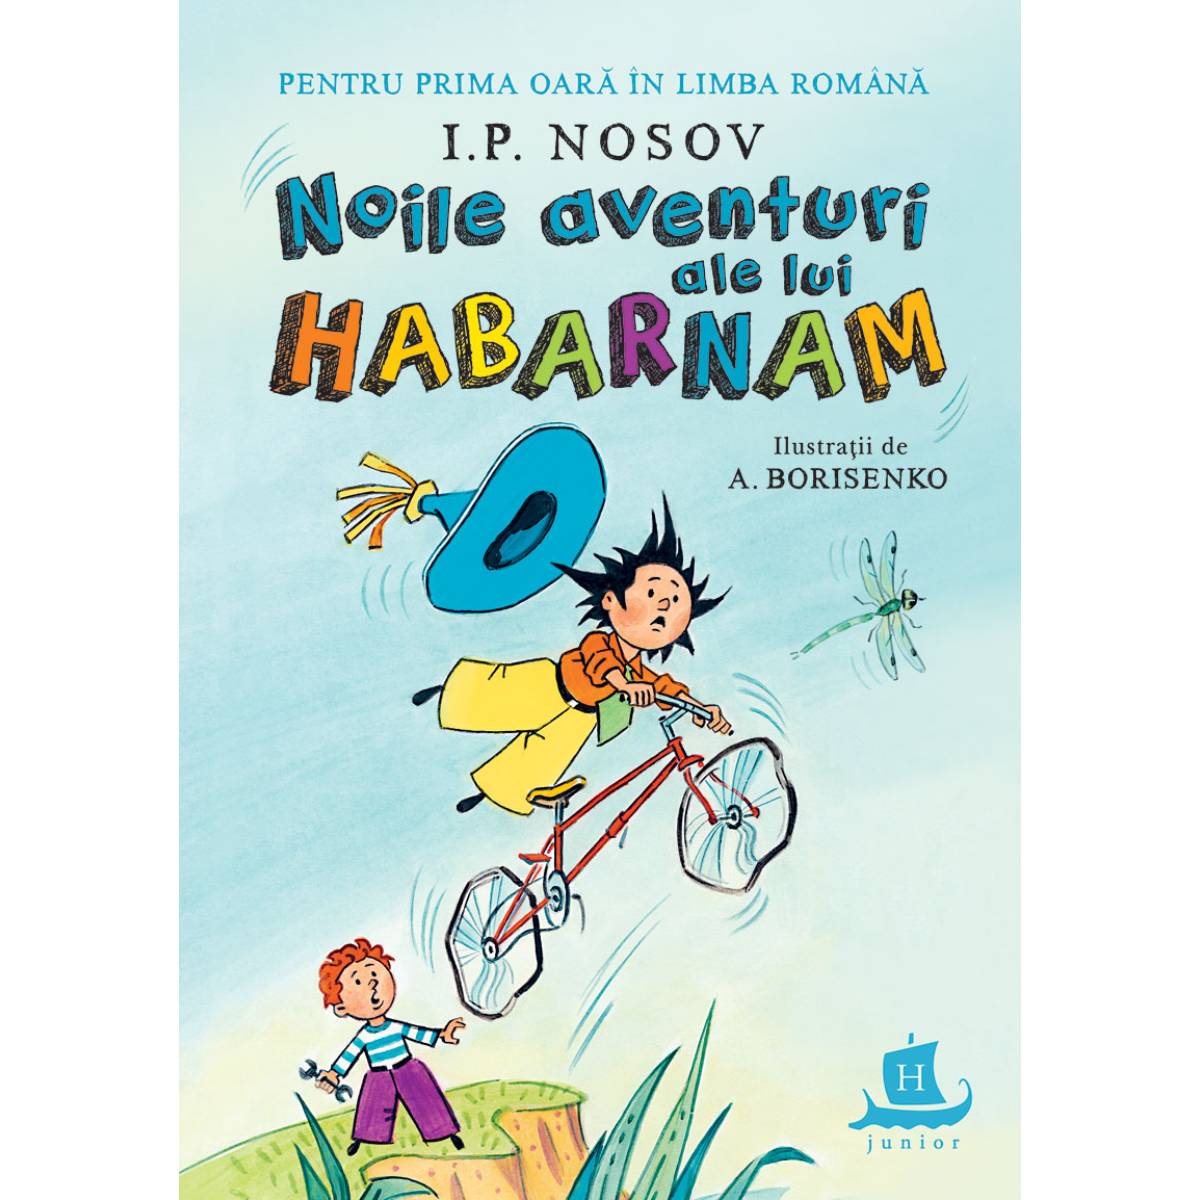 Noile aventuri ale lui Habarnam, Igor Nosov